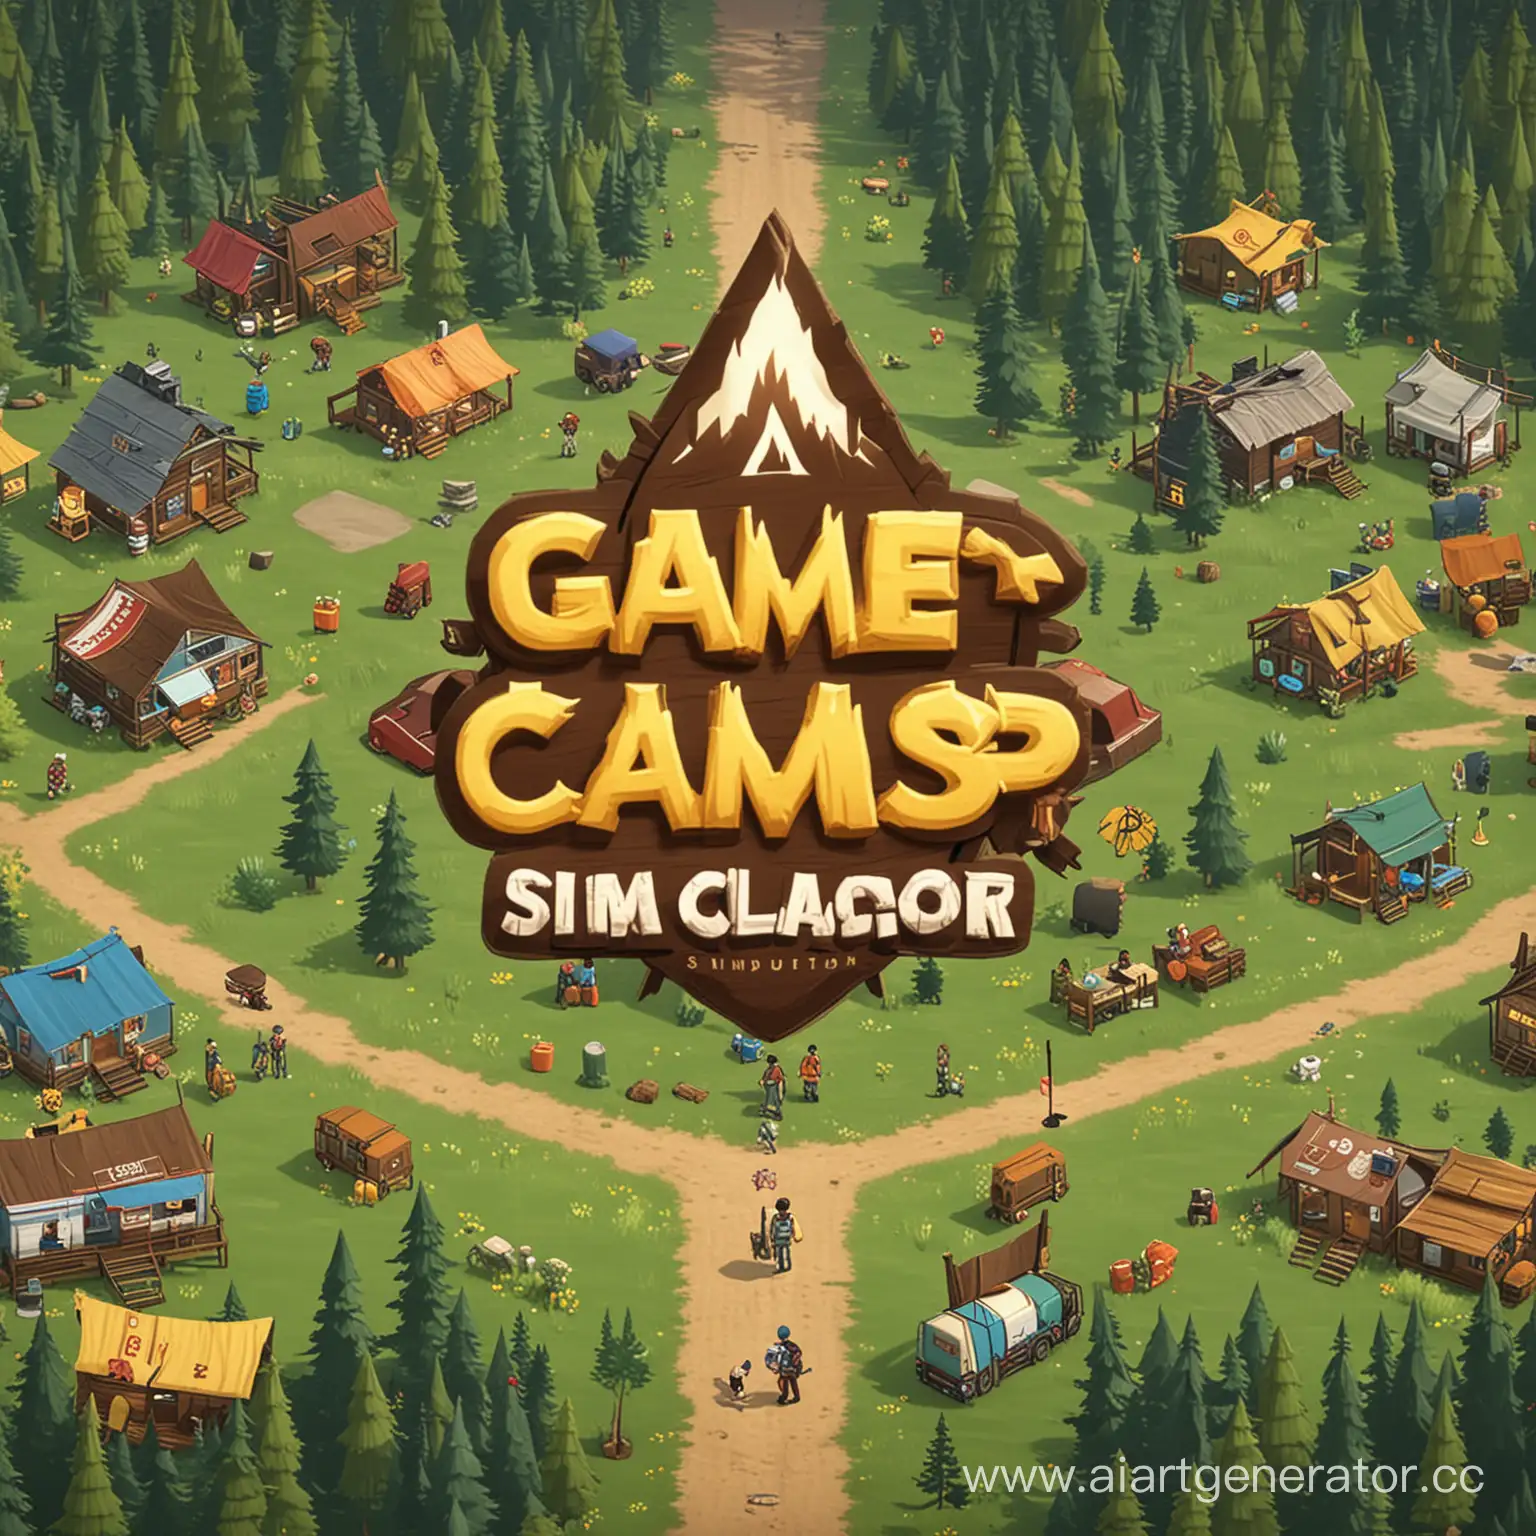 A game Camp counselor simulator 